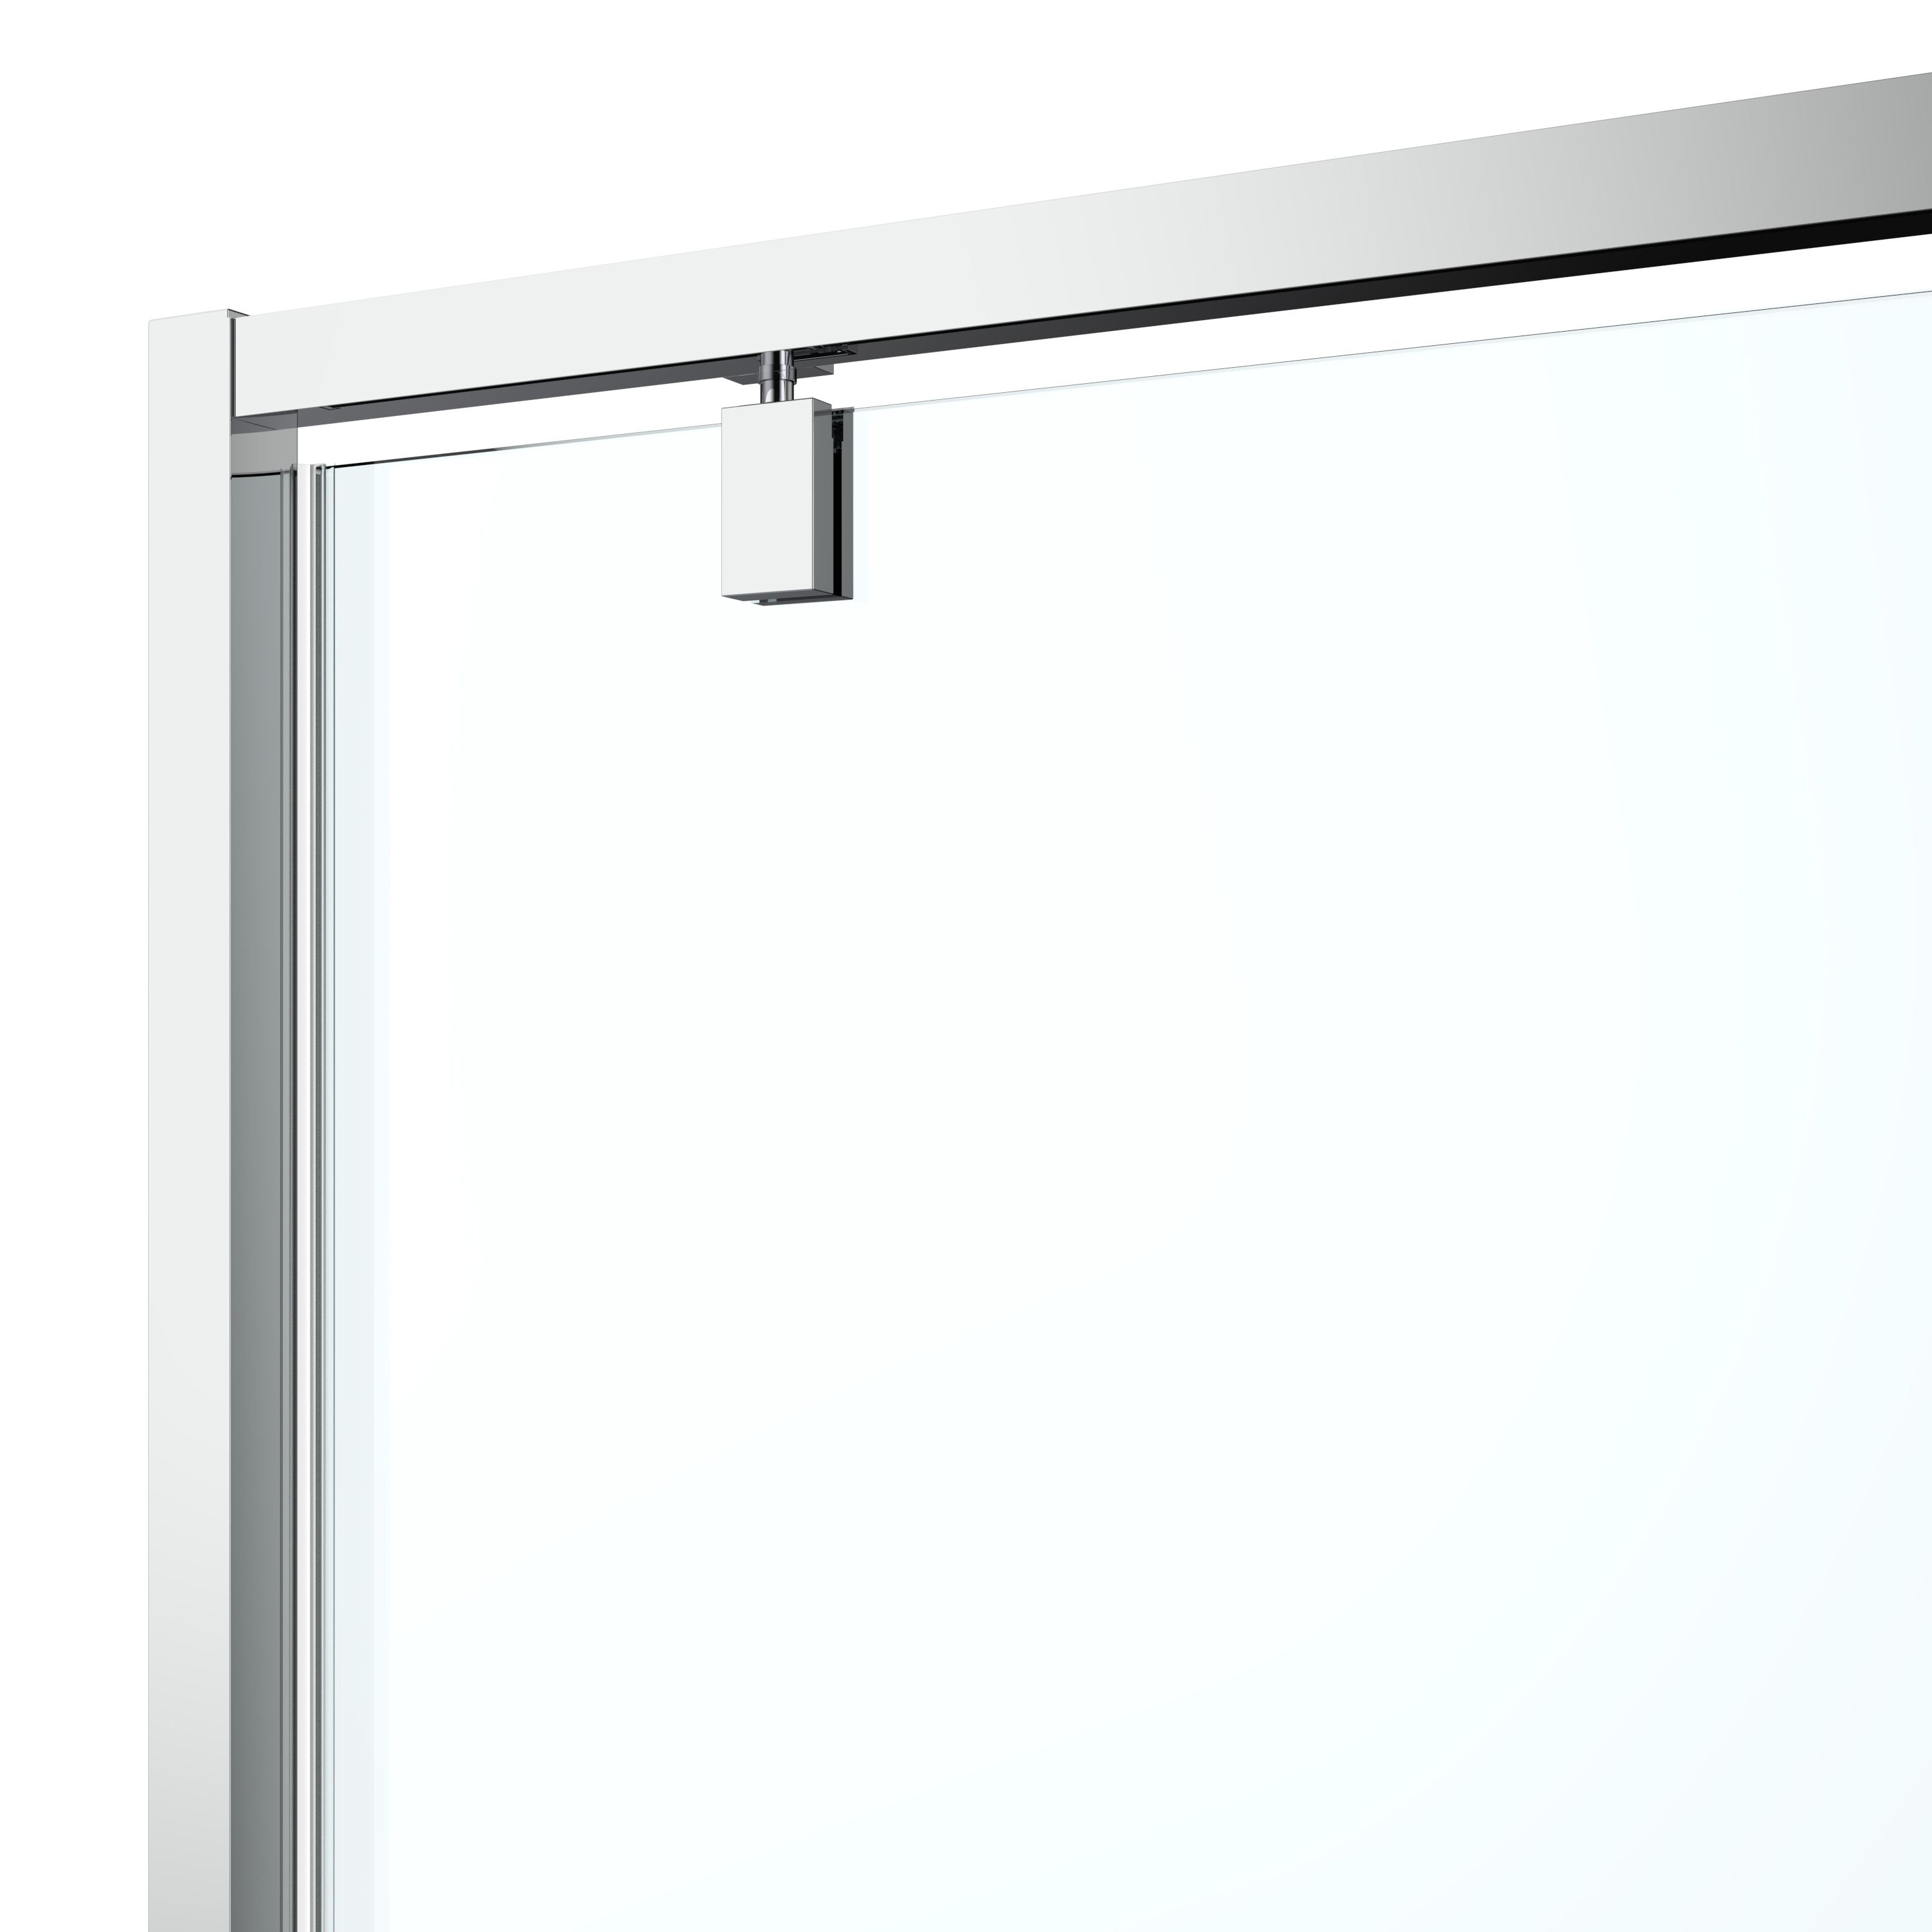 GoodHome Ledava Minimal frame Chrome effect Mirror Strip Half open pivot Shower Door (H)195cm (W)80cm